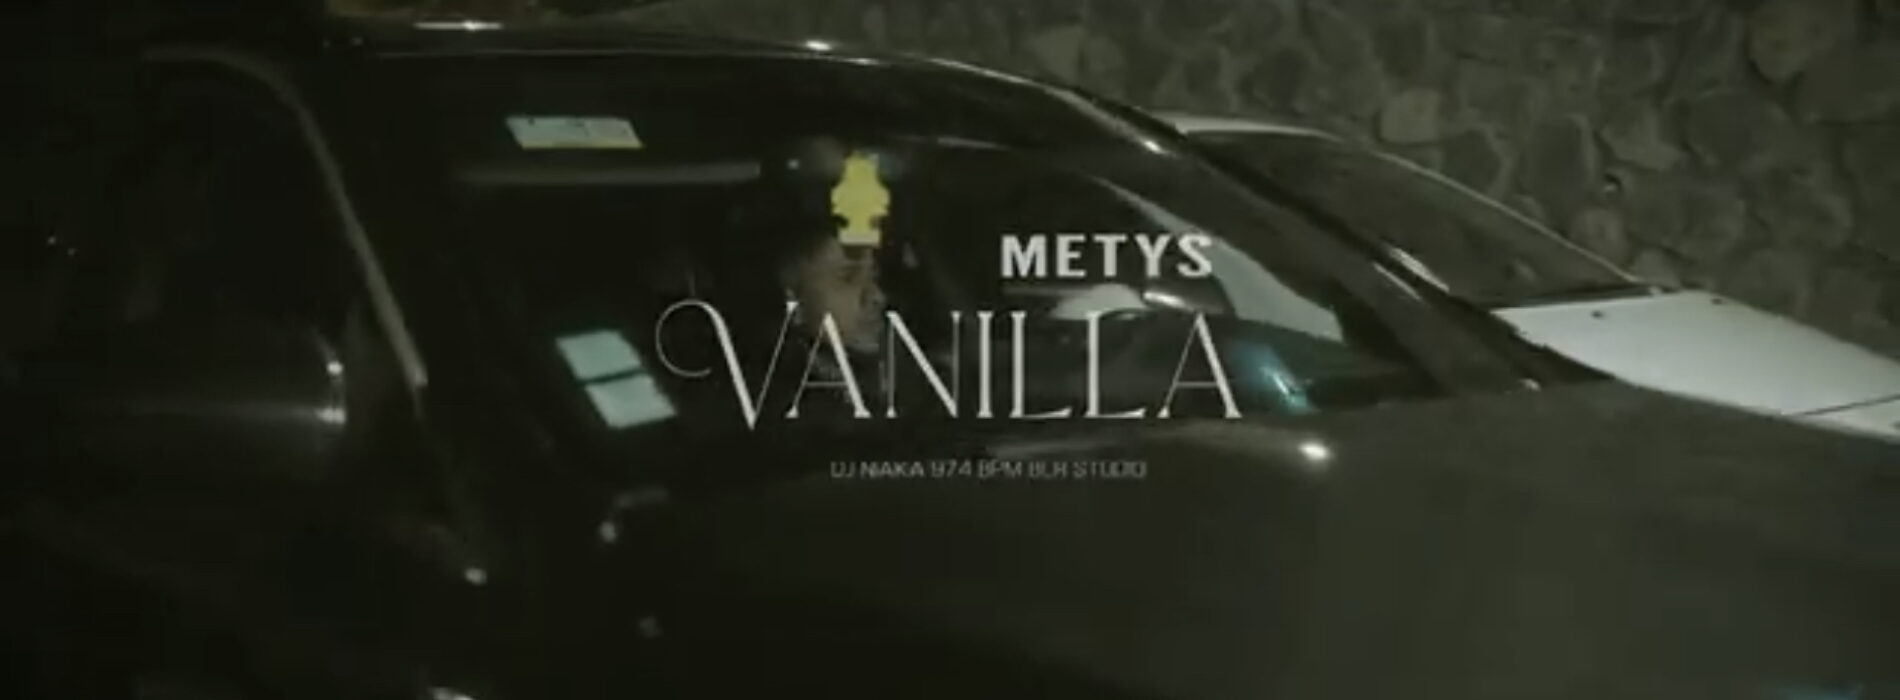 METYS – Vanilla